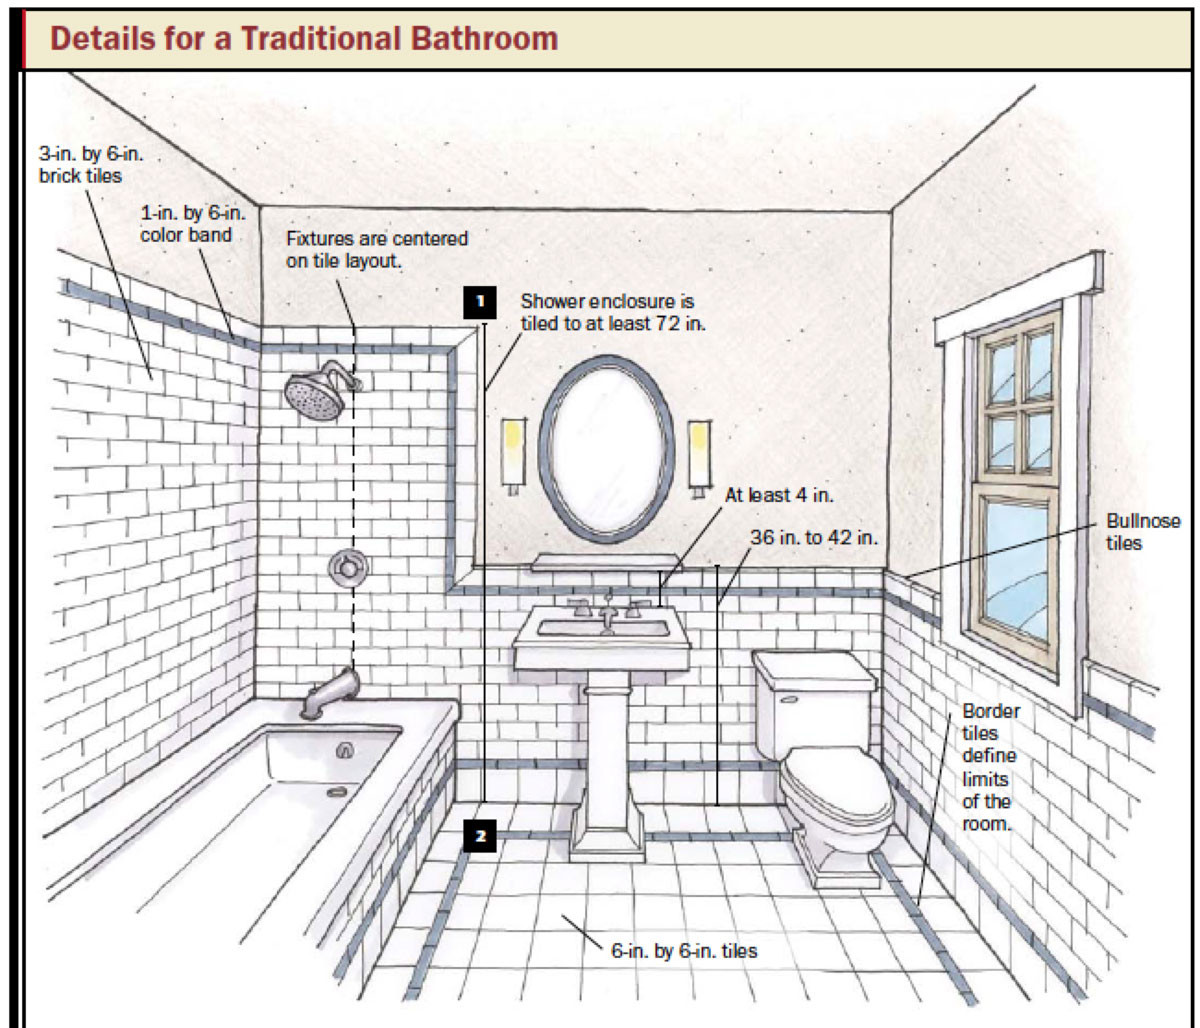 25 Favorite Free Online Bathroom Design tool - Free Online Bathroom Design Tool Lovely Bathroom Design Amp Planning Tips Taymor Of Free Online Bathroom Design Tool